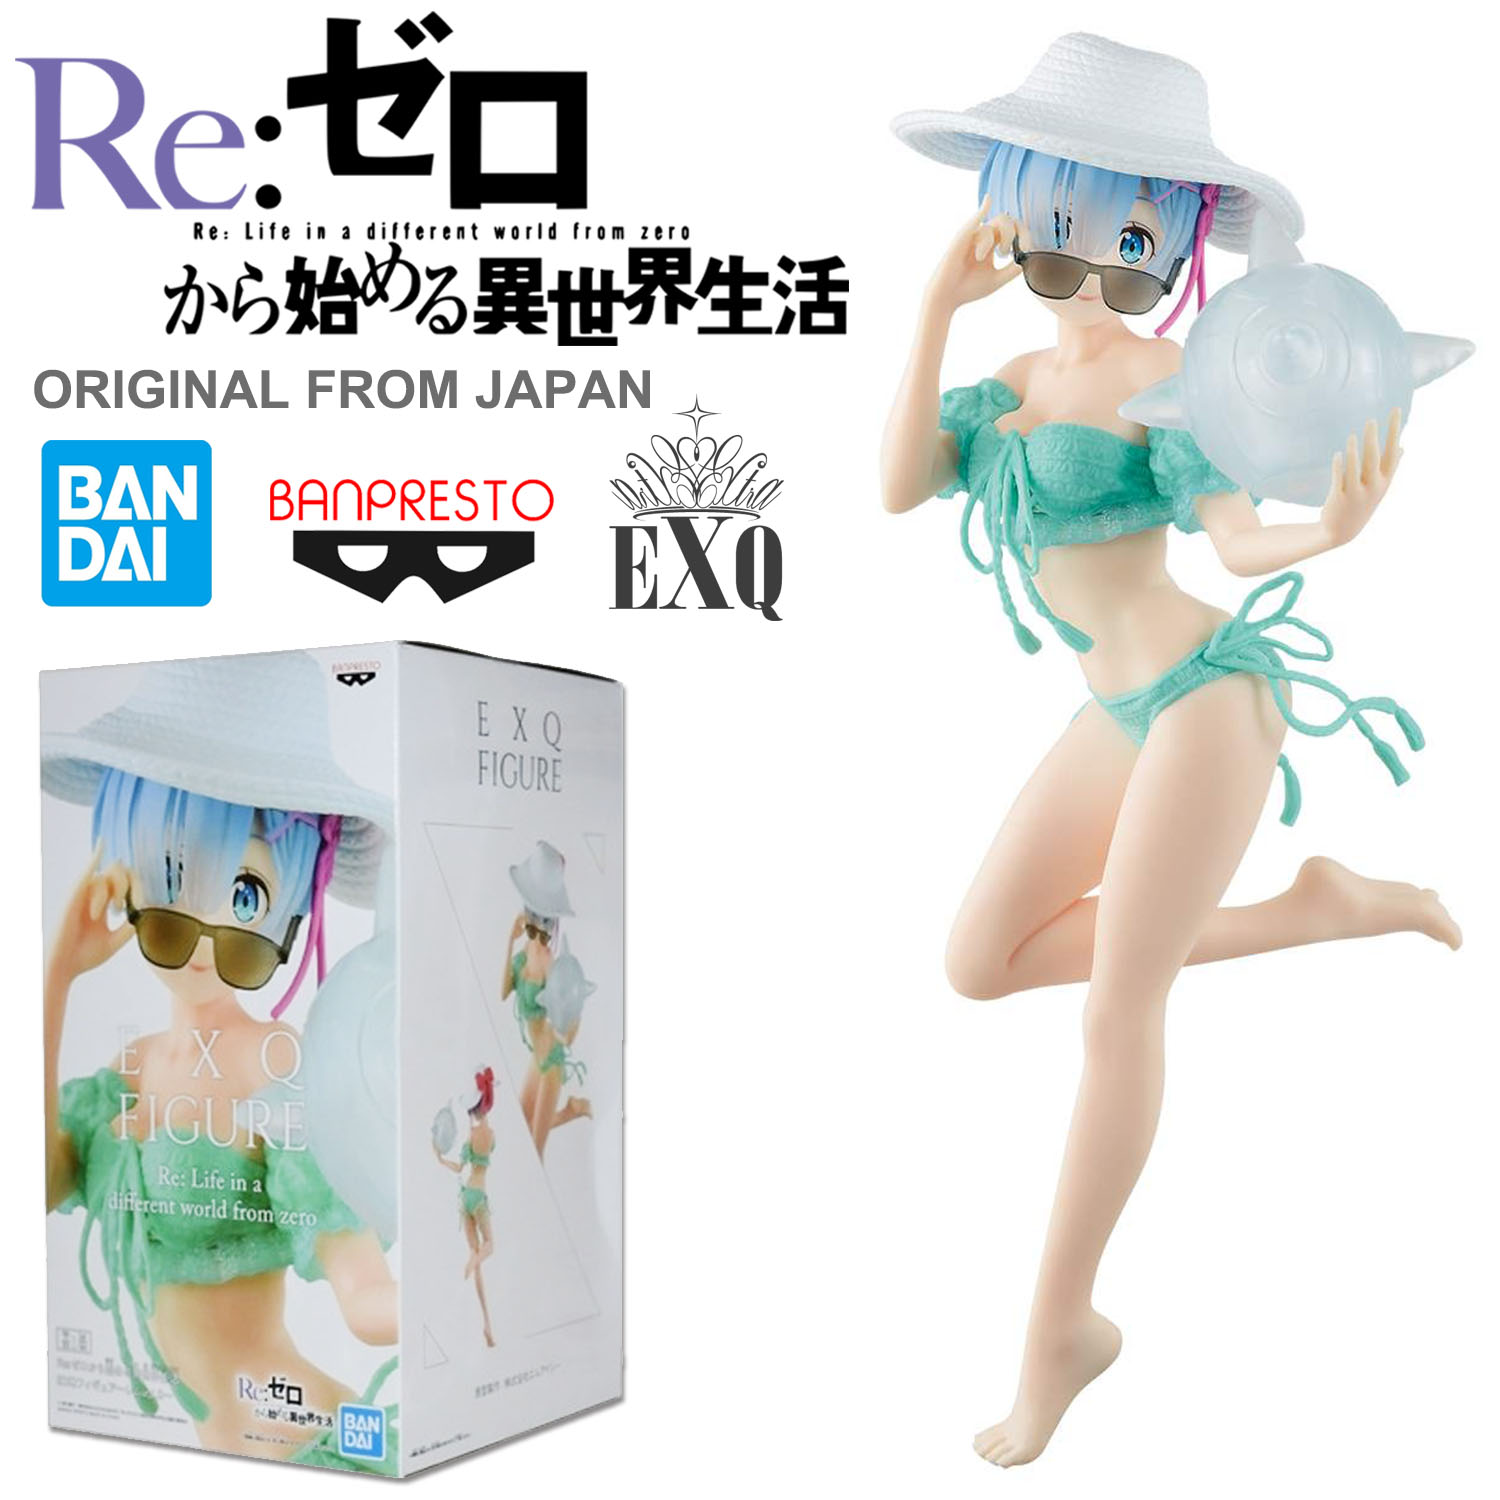 Model โมเดล ของแท้ 100�ndai Banpresto จาก Re ZERO Starting Life in Another World รีเซทชีวิต ฝ่าวิกฤตต่างโลก Rem เรม Swimsuit ชุดว่ายน้ำ Ver Original from Japan Figure ฟิกเกอร์ Anime ของขวัญ อนิเมะ การ์ตูน มังงะ คอลเลกชัน สั่งและนำเข้าจากญี่ปุ่น manga